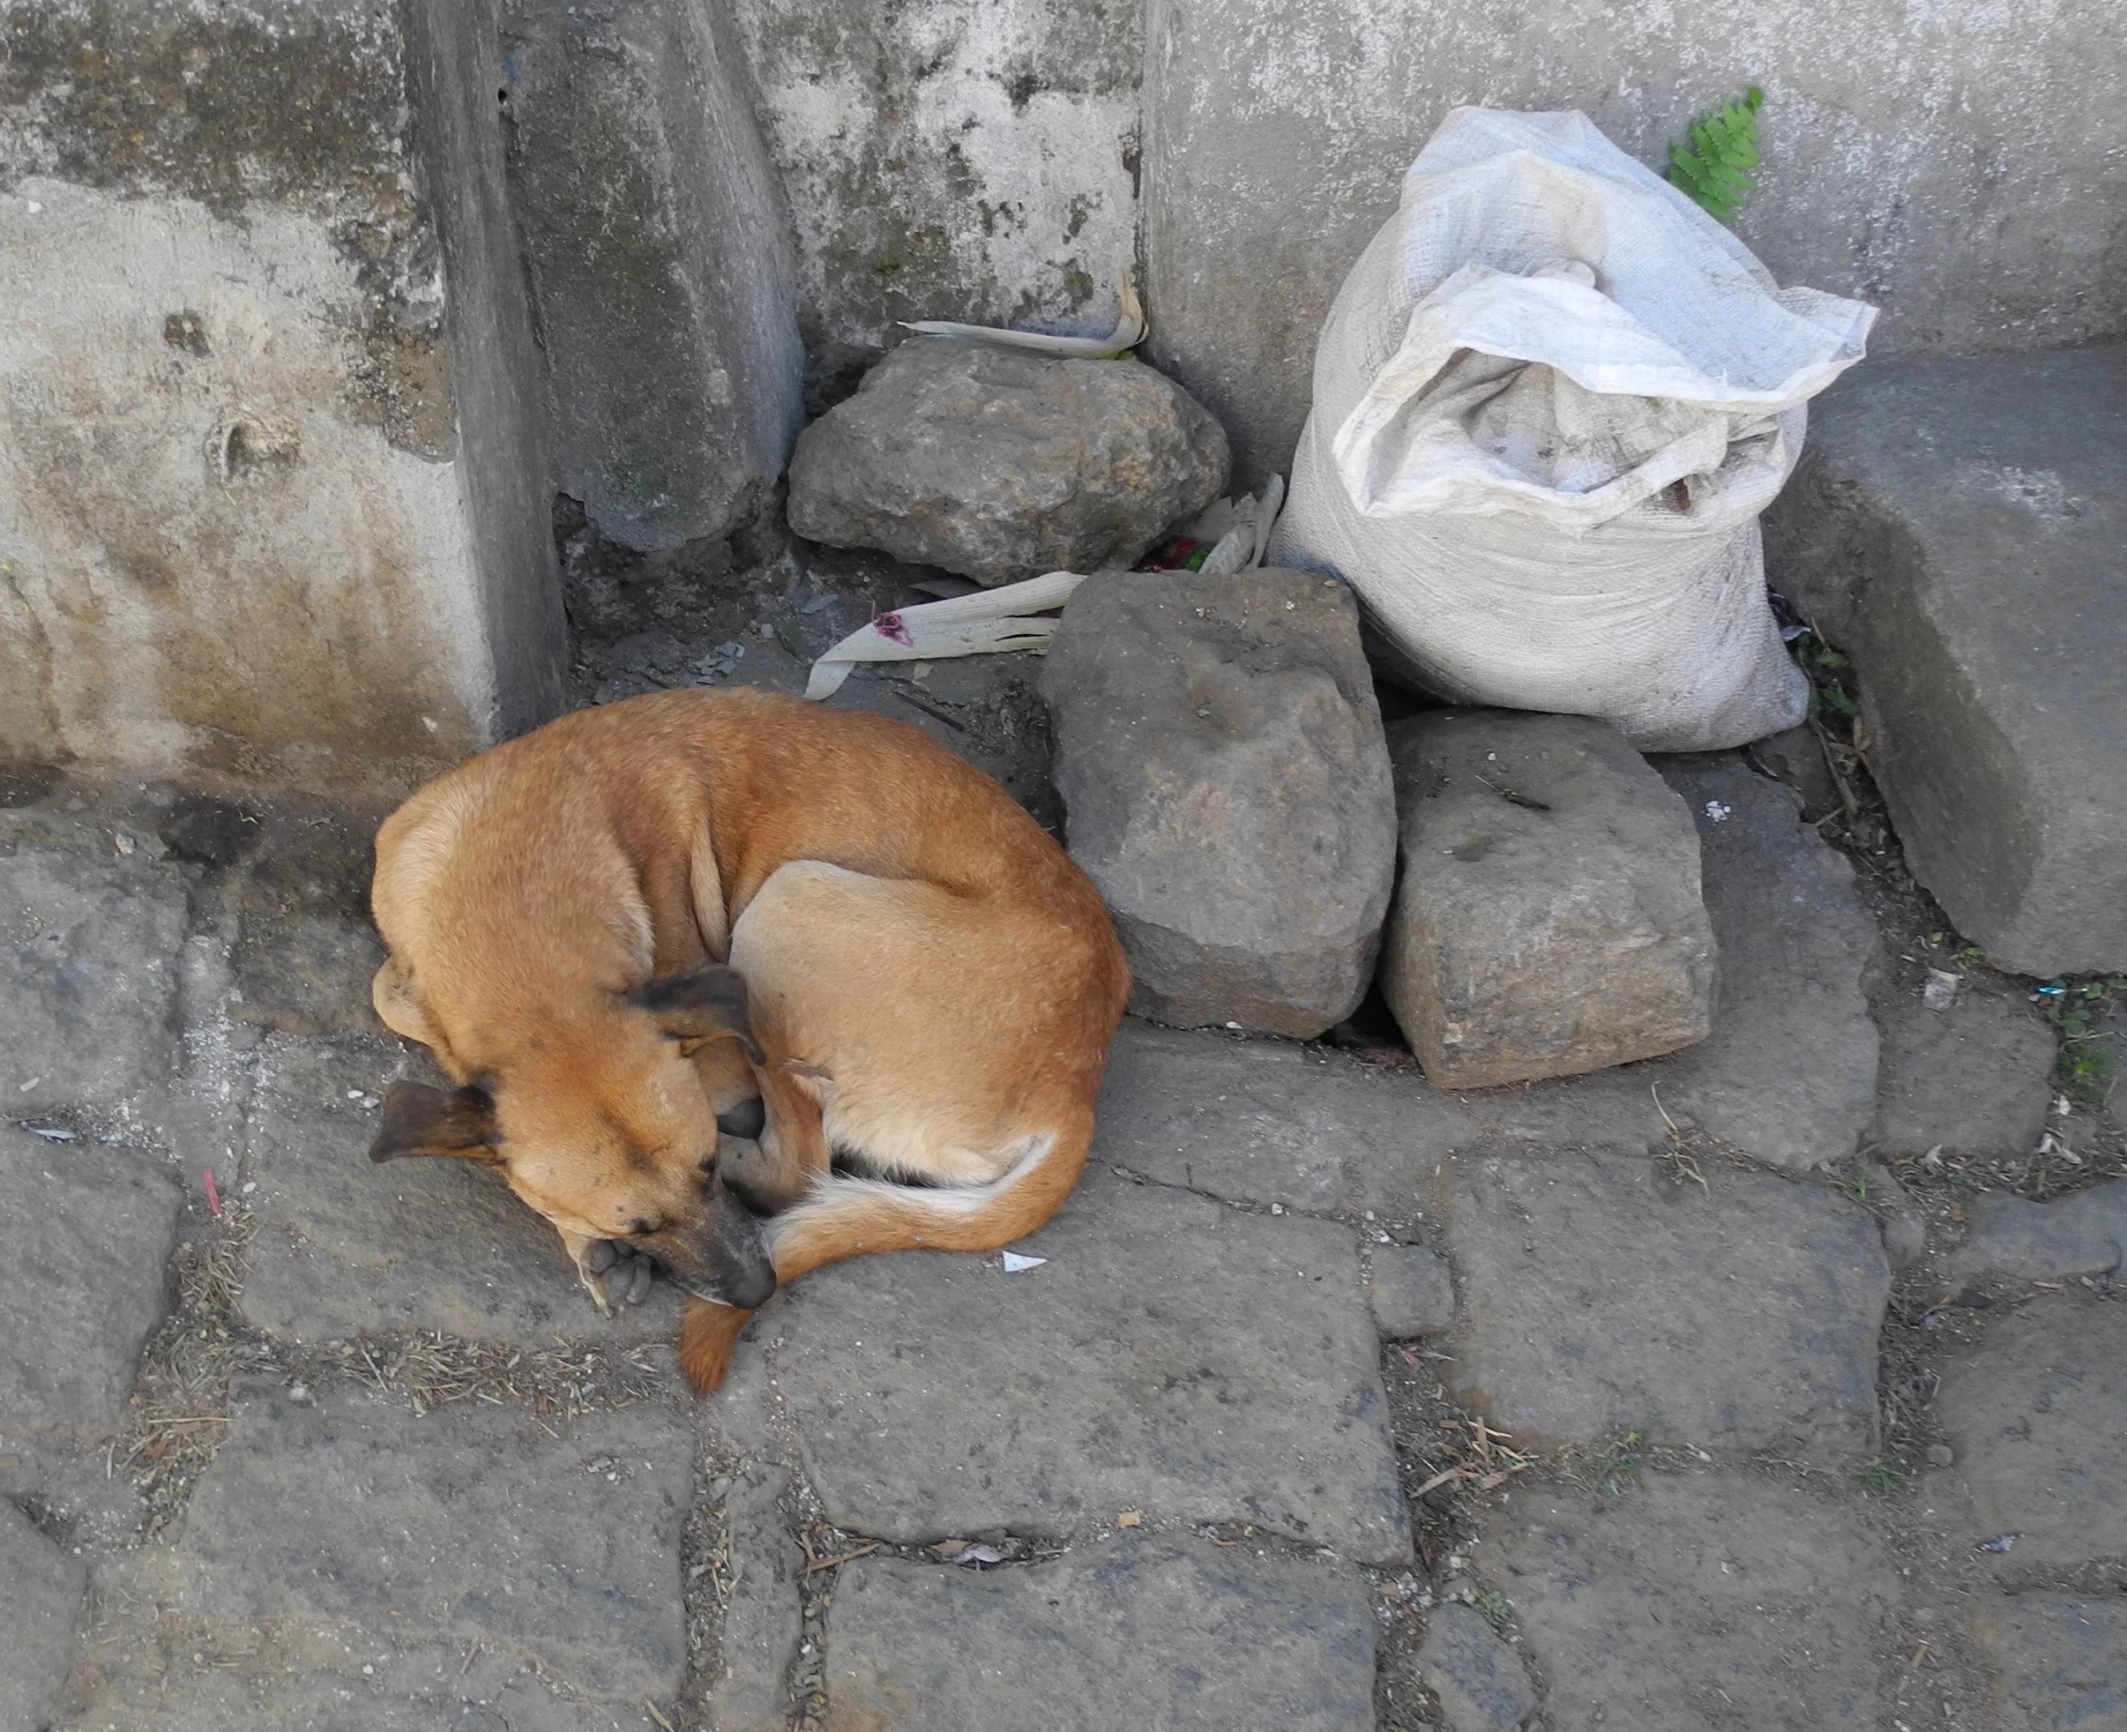 the small dog has fallen asleep on the stone walkway